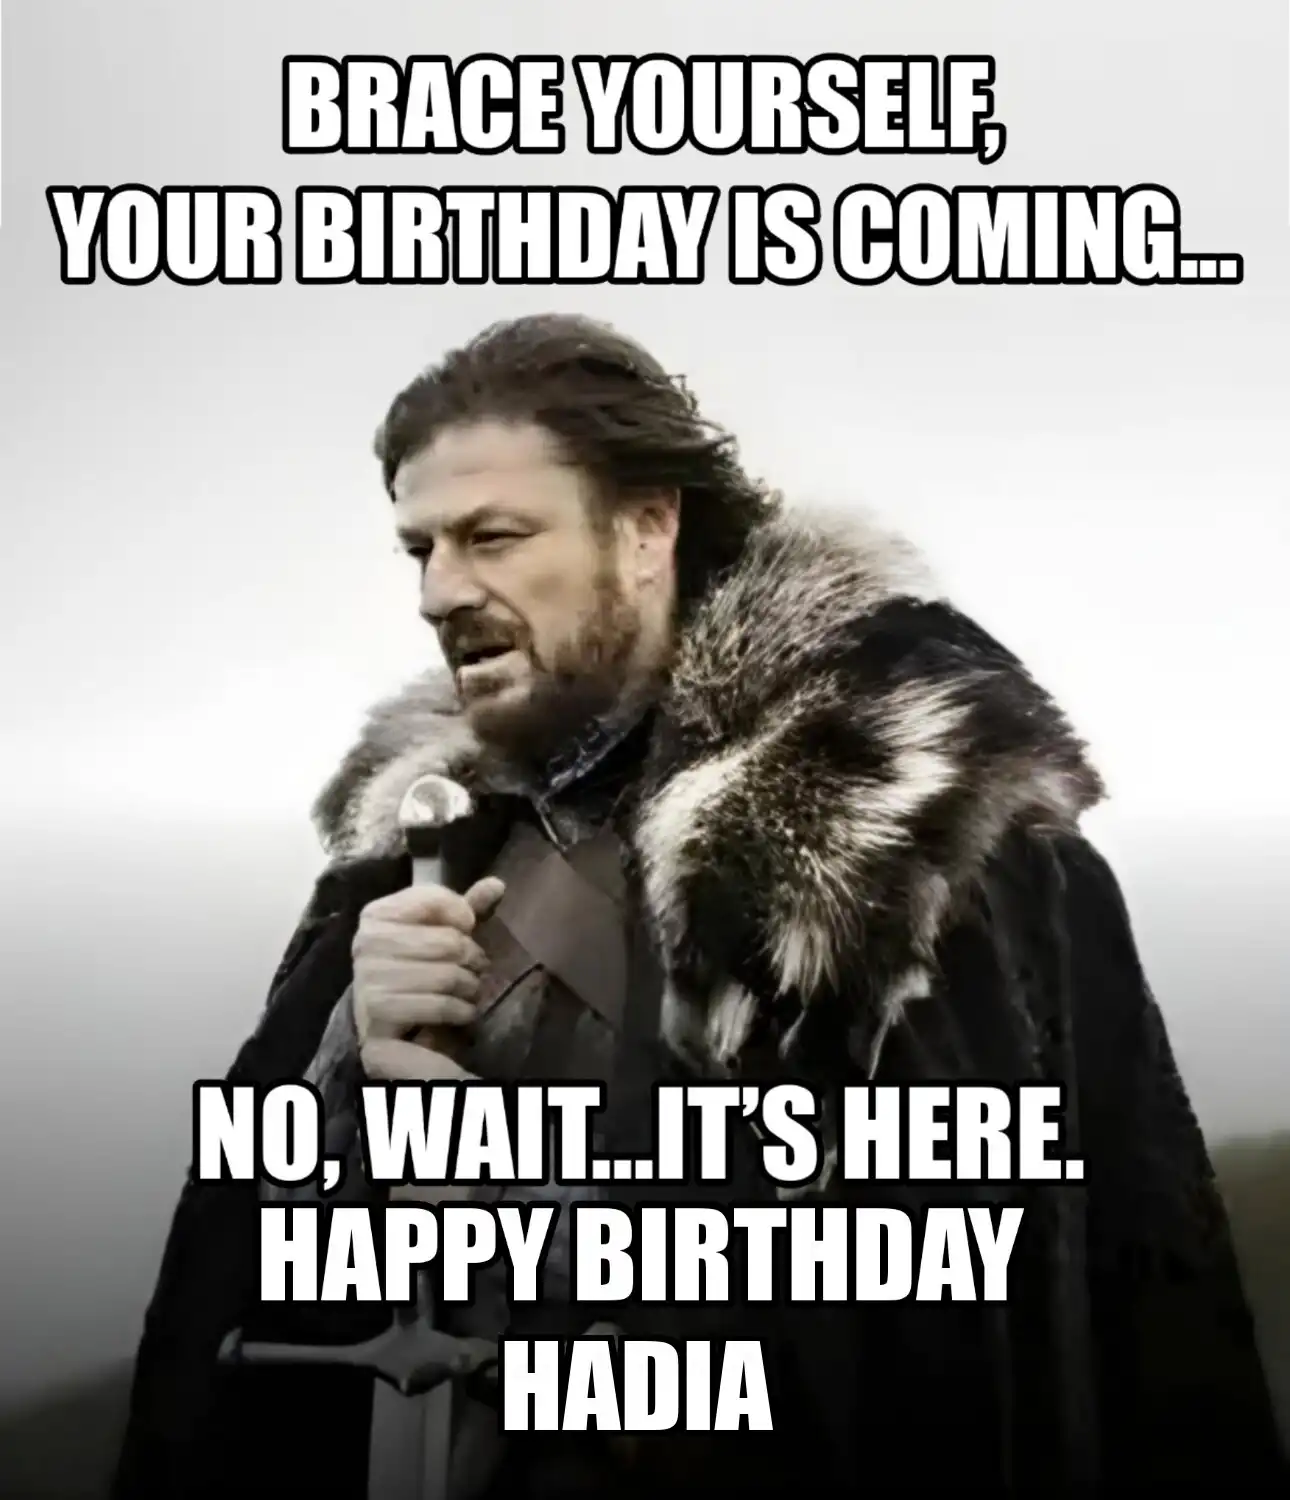 Happy Birthday Hadia Brace Yourself Your Birthday Is Coming Meme